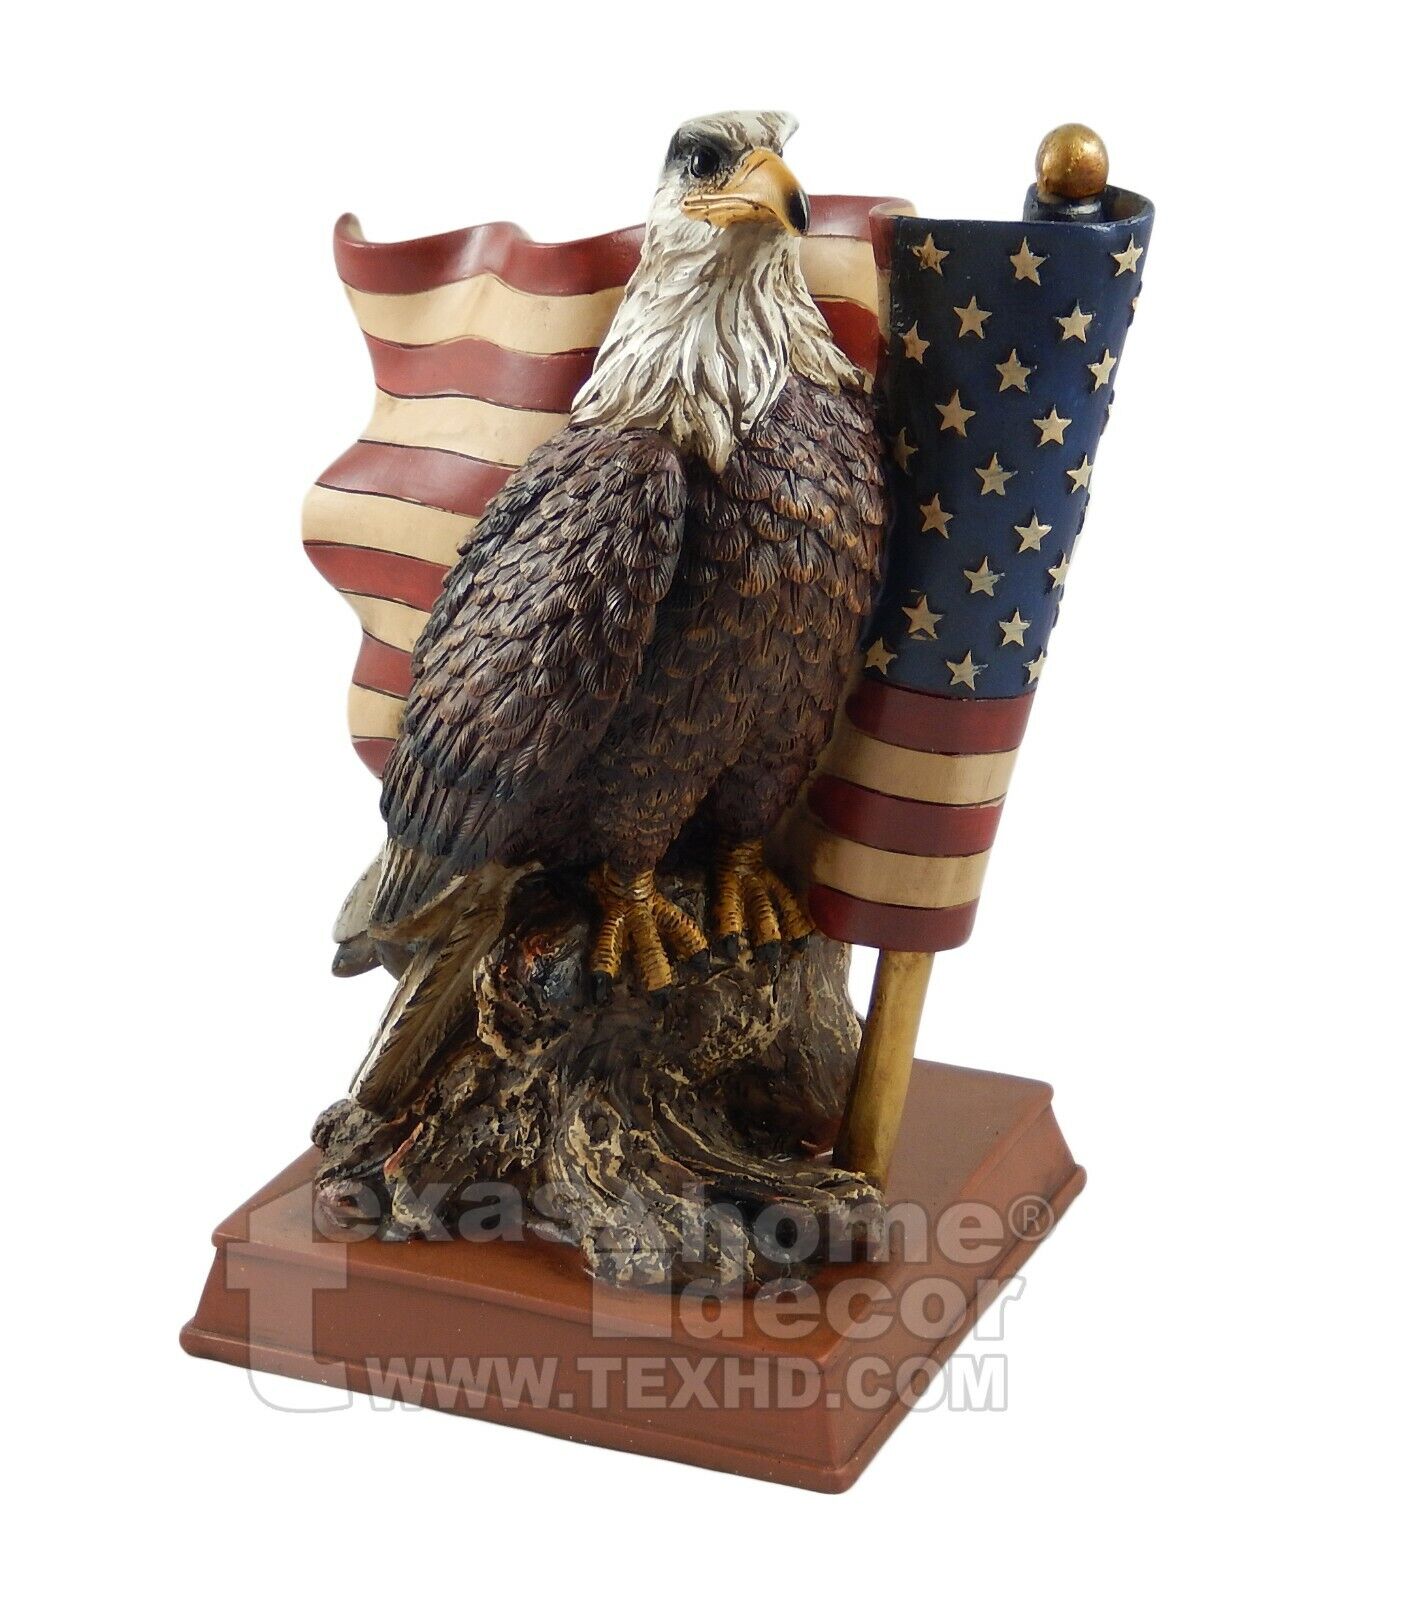 Bald Eagle Bust Figurine Statue United States Flag Patriotic Home Office Decor 